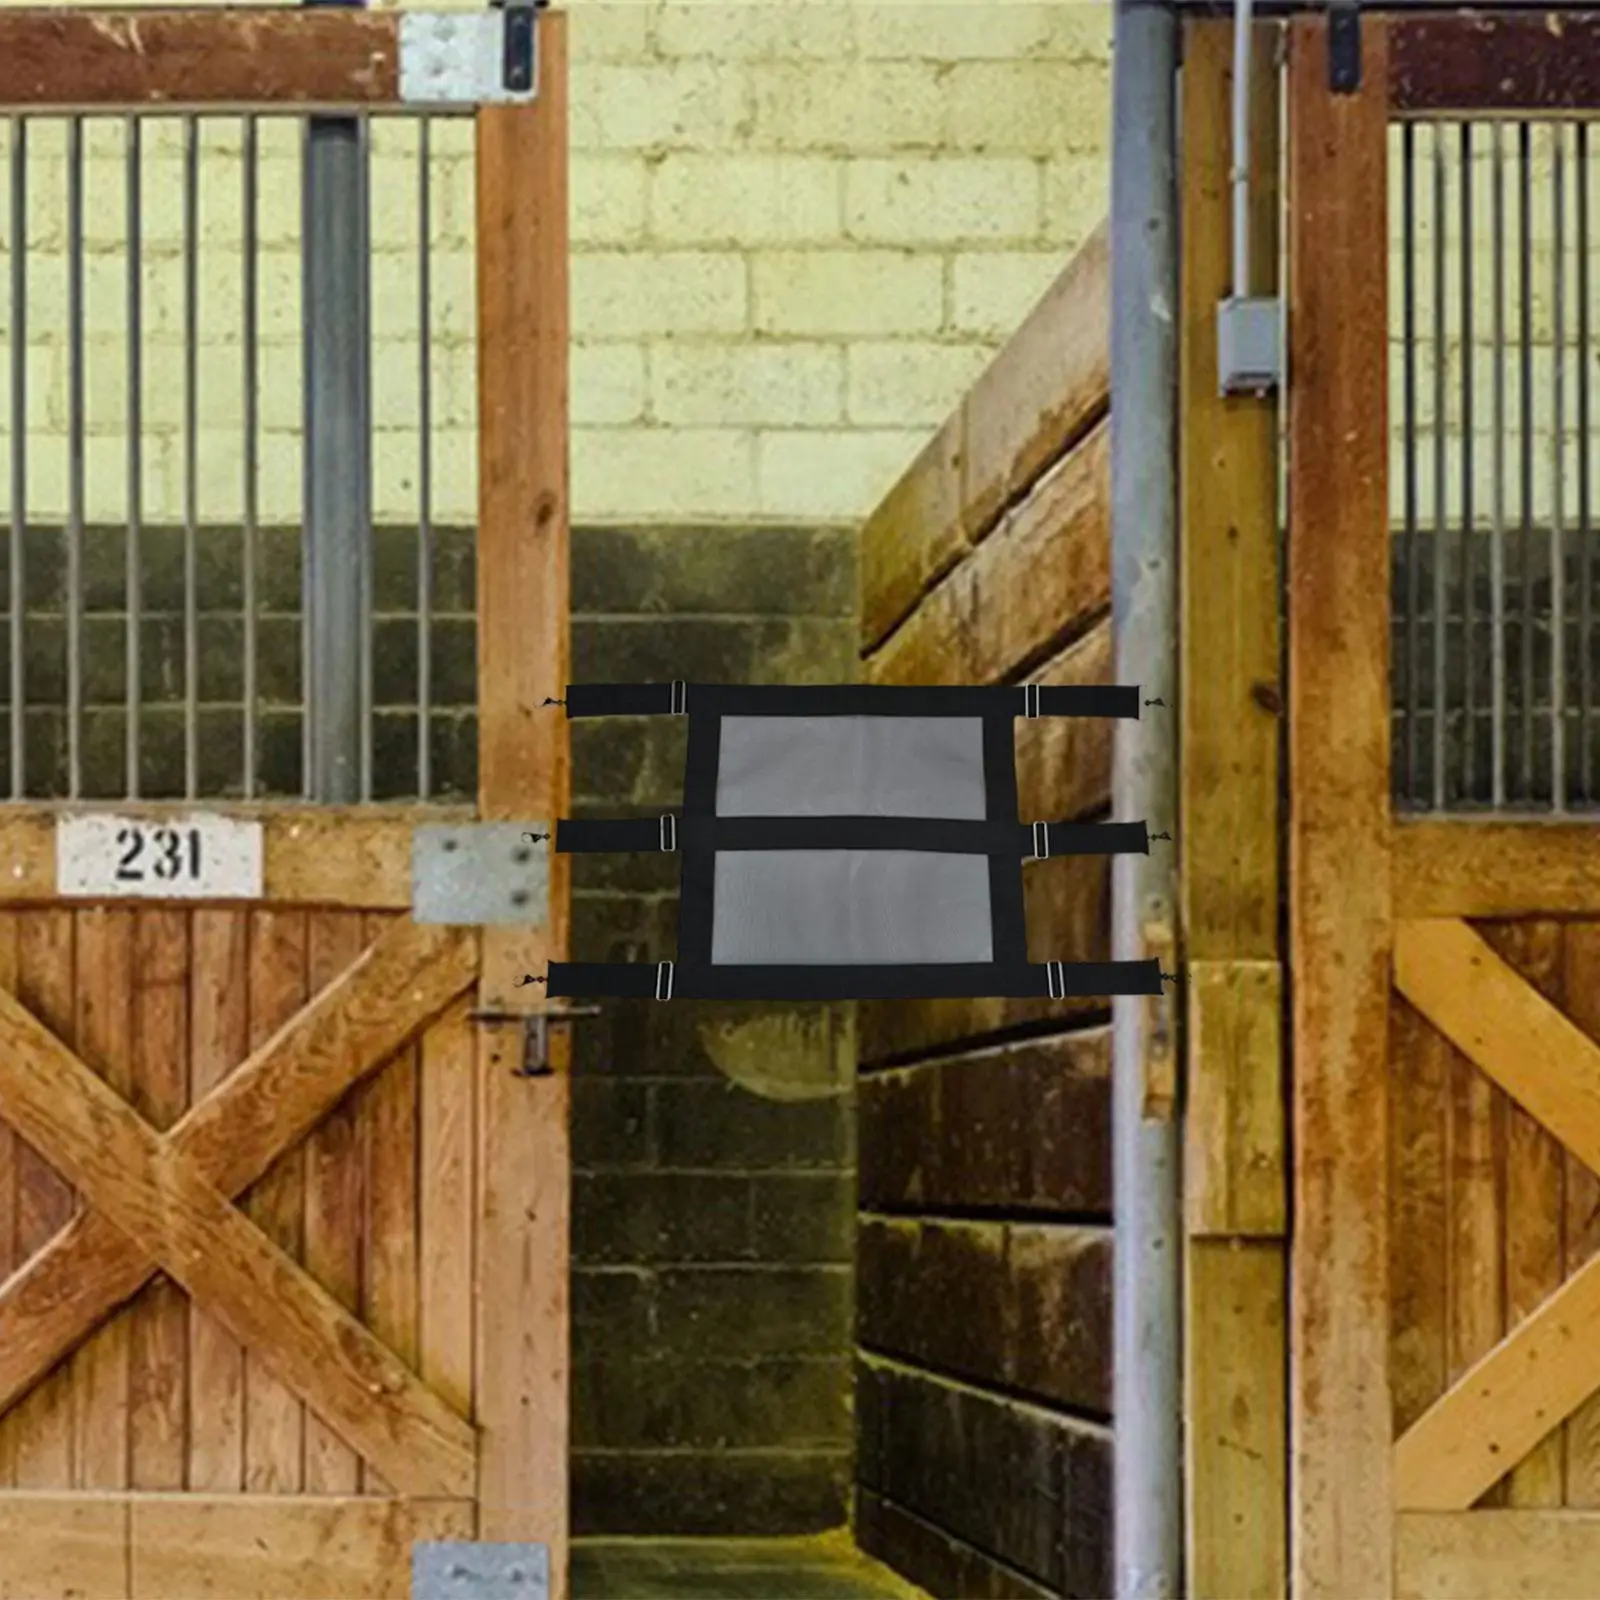 Large Horse Stall Guard Straps Black Hardware Mesh Air Flow Adjustable Barn